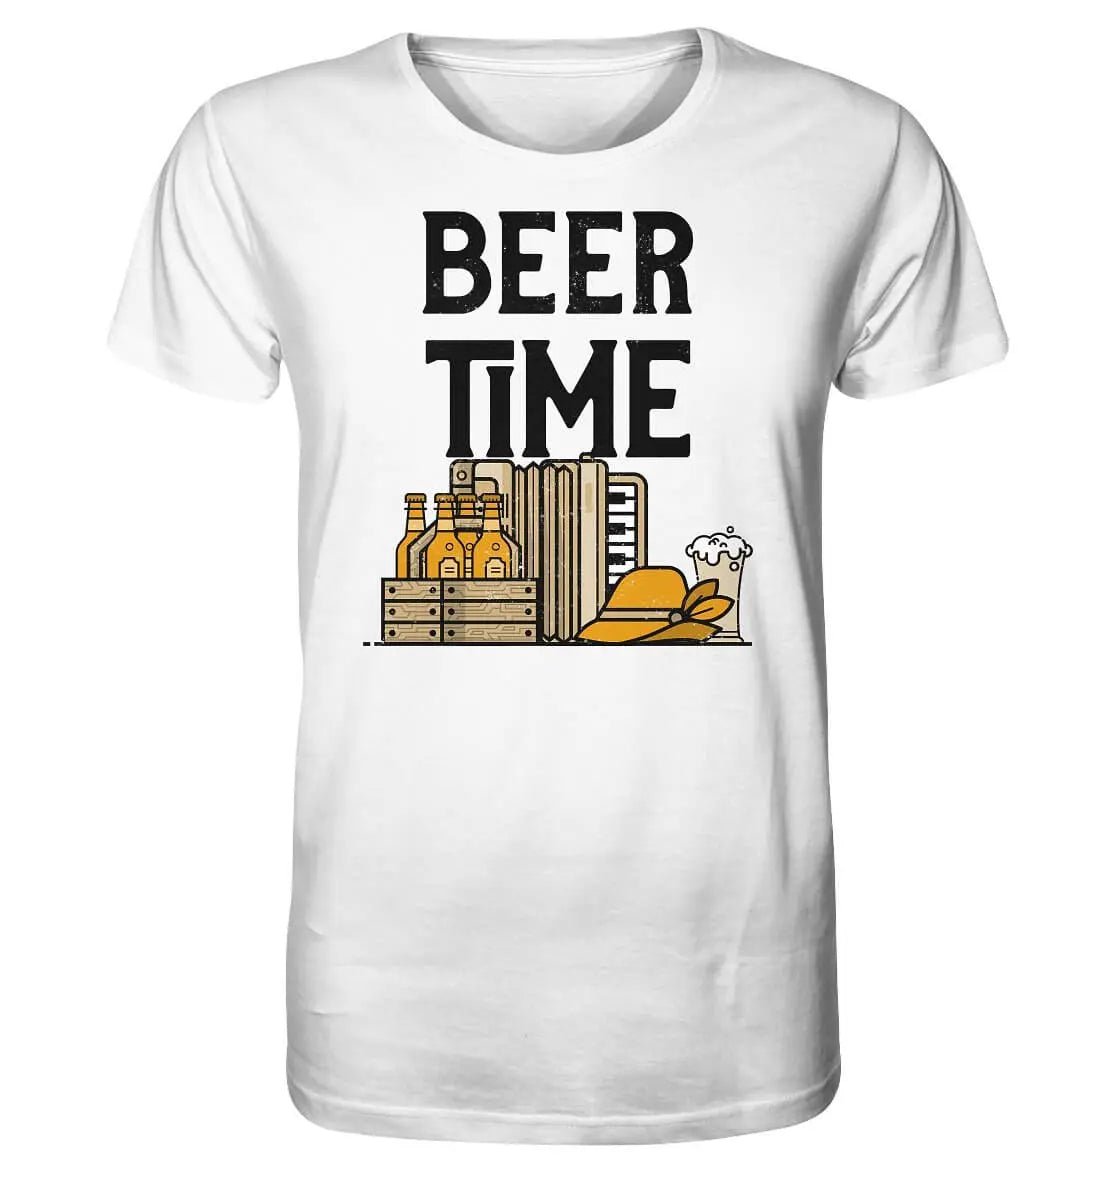 Hoppymerch's Beer Time - Bio-T-Shirt